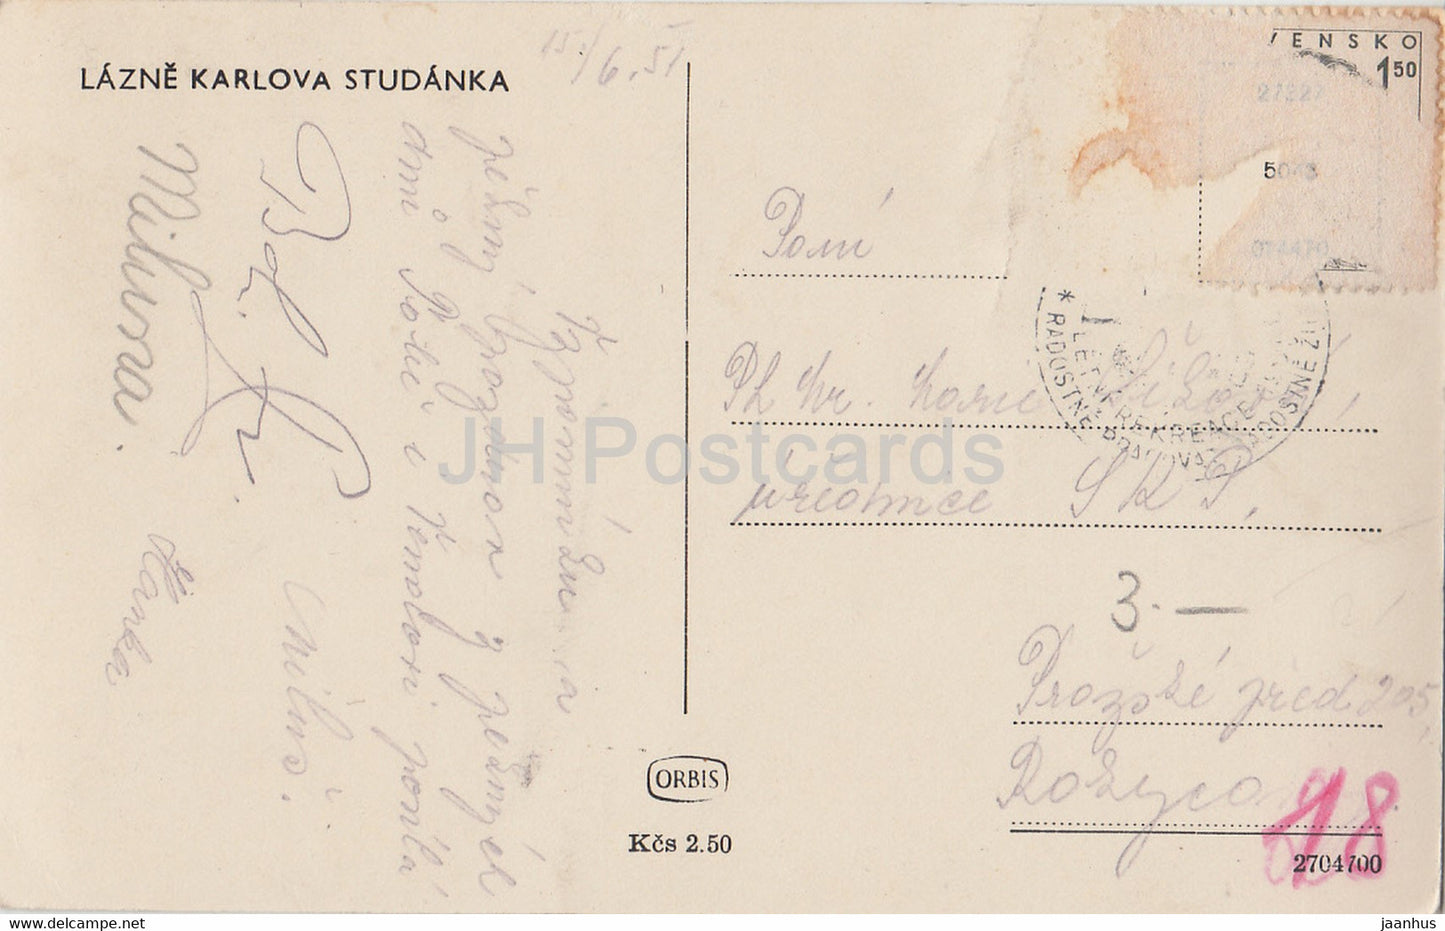 Lazne Karlova Studanka - alte Postkarte - 1951 - Tschechoslowakei - Tschechische Republik - gebraucht